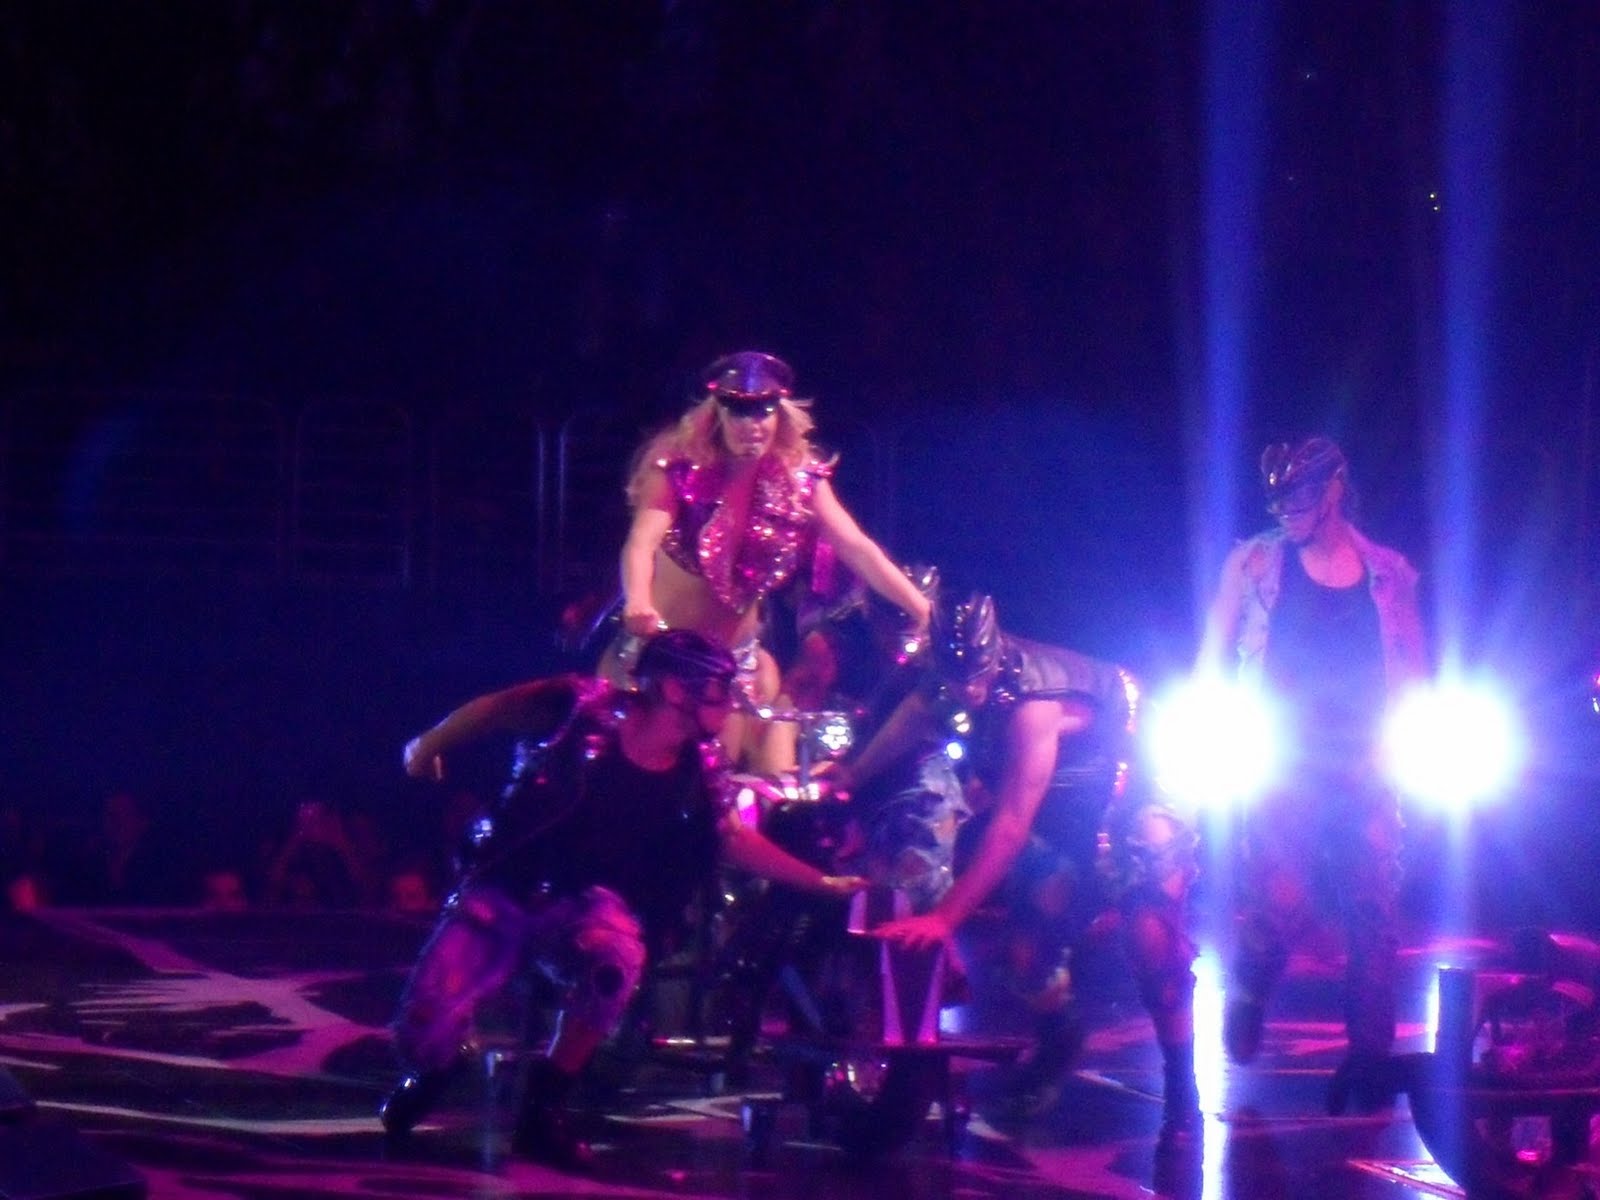 http://1.bp.blogspot.com/-Yq0iKMIdiOw/TmJa8W-DIpI/AAAAAAAACho/6HVHSYmLT3U/s1600/Britney+Spears+2011+July+14.jpg